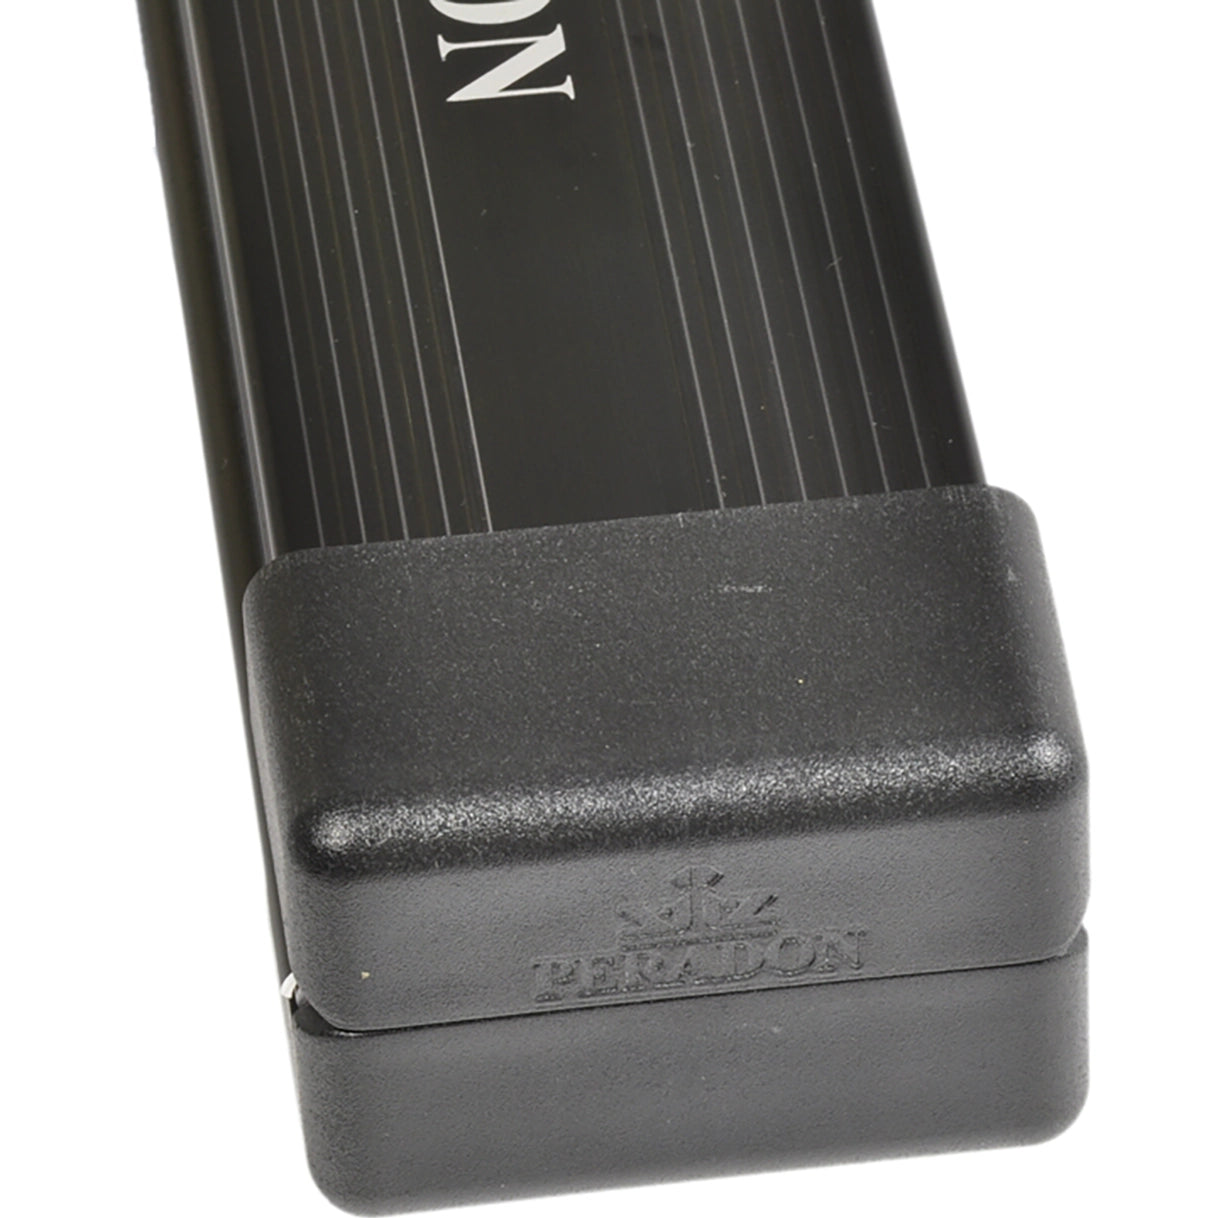 Peradon Black Aluminium Case for 3/4 Cues and Extensions. End cap view